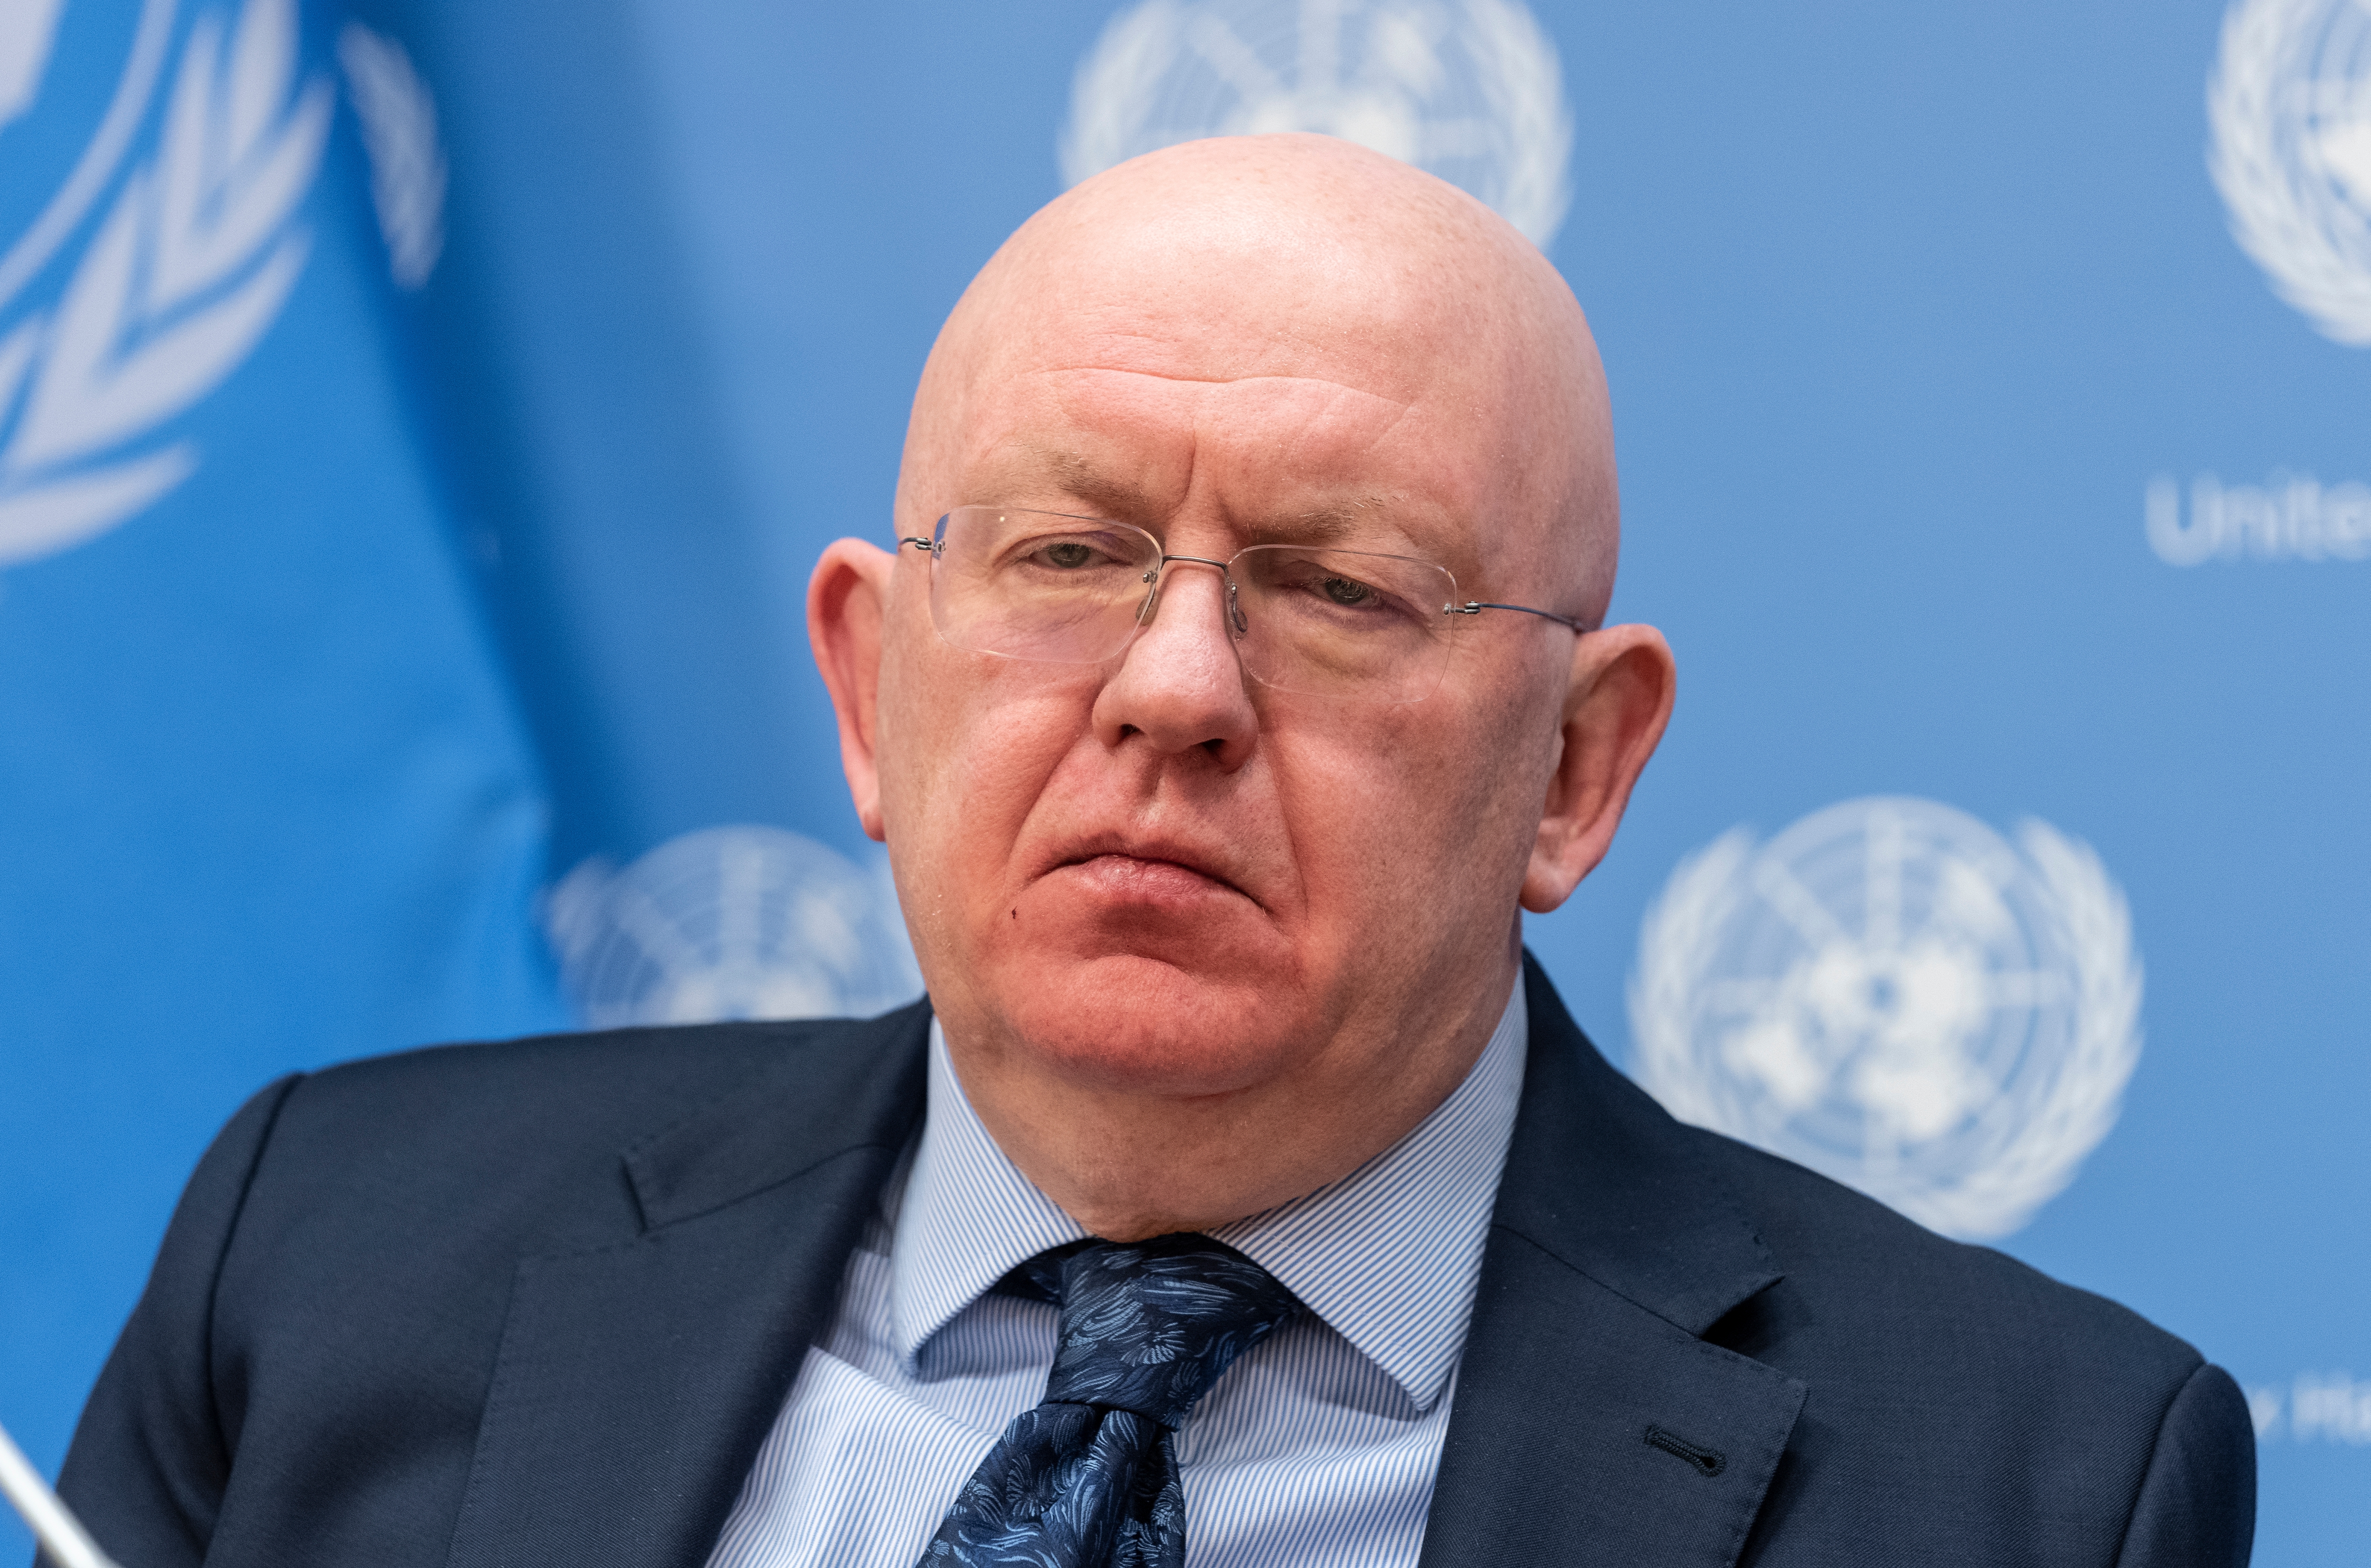 Ambasadorul Rusiei la ONU Vassili Nebenzia